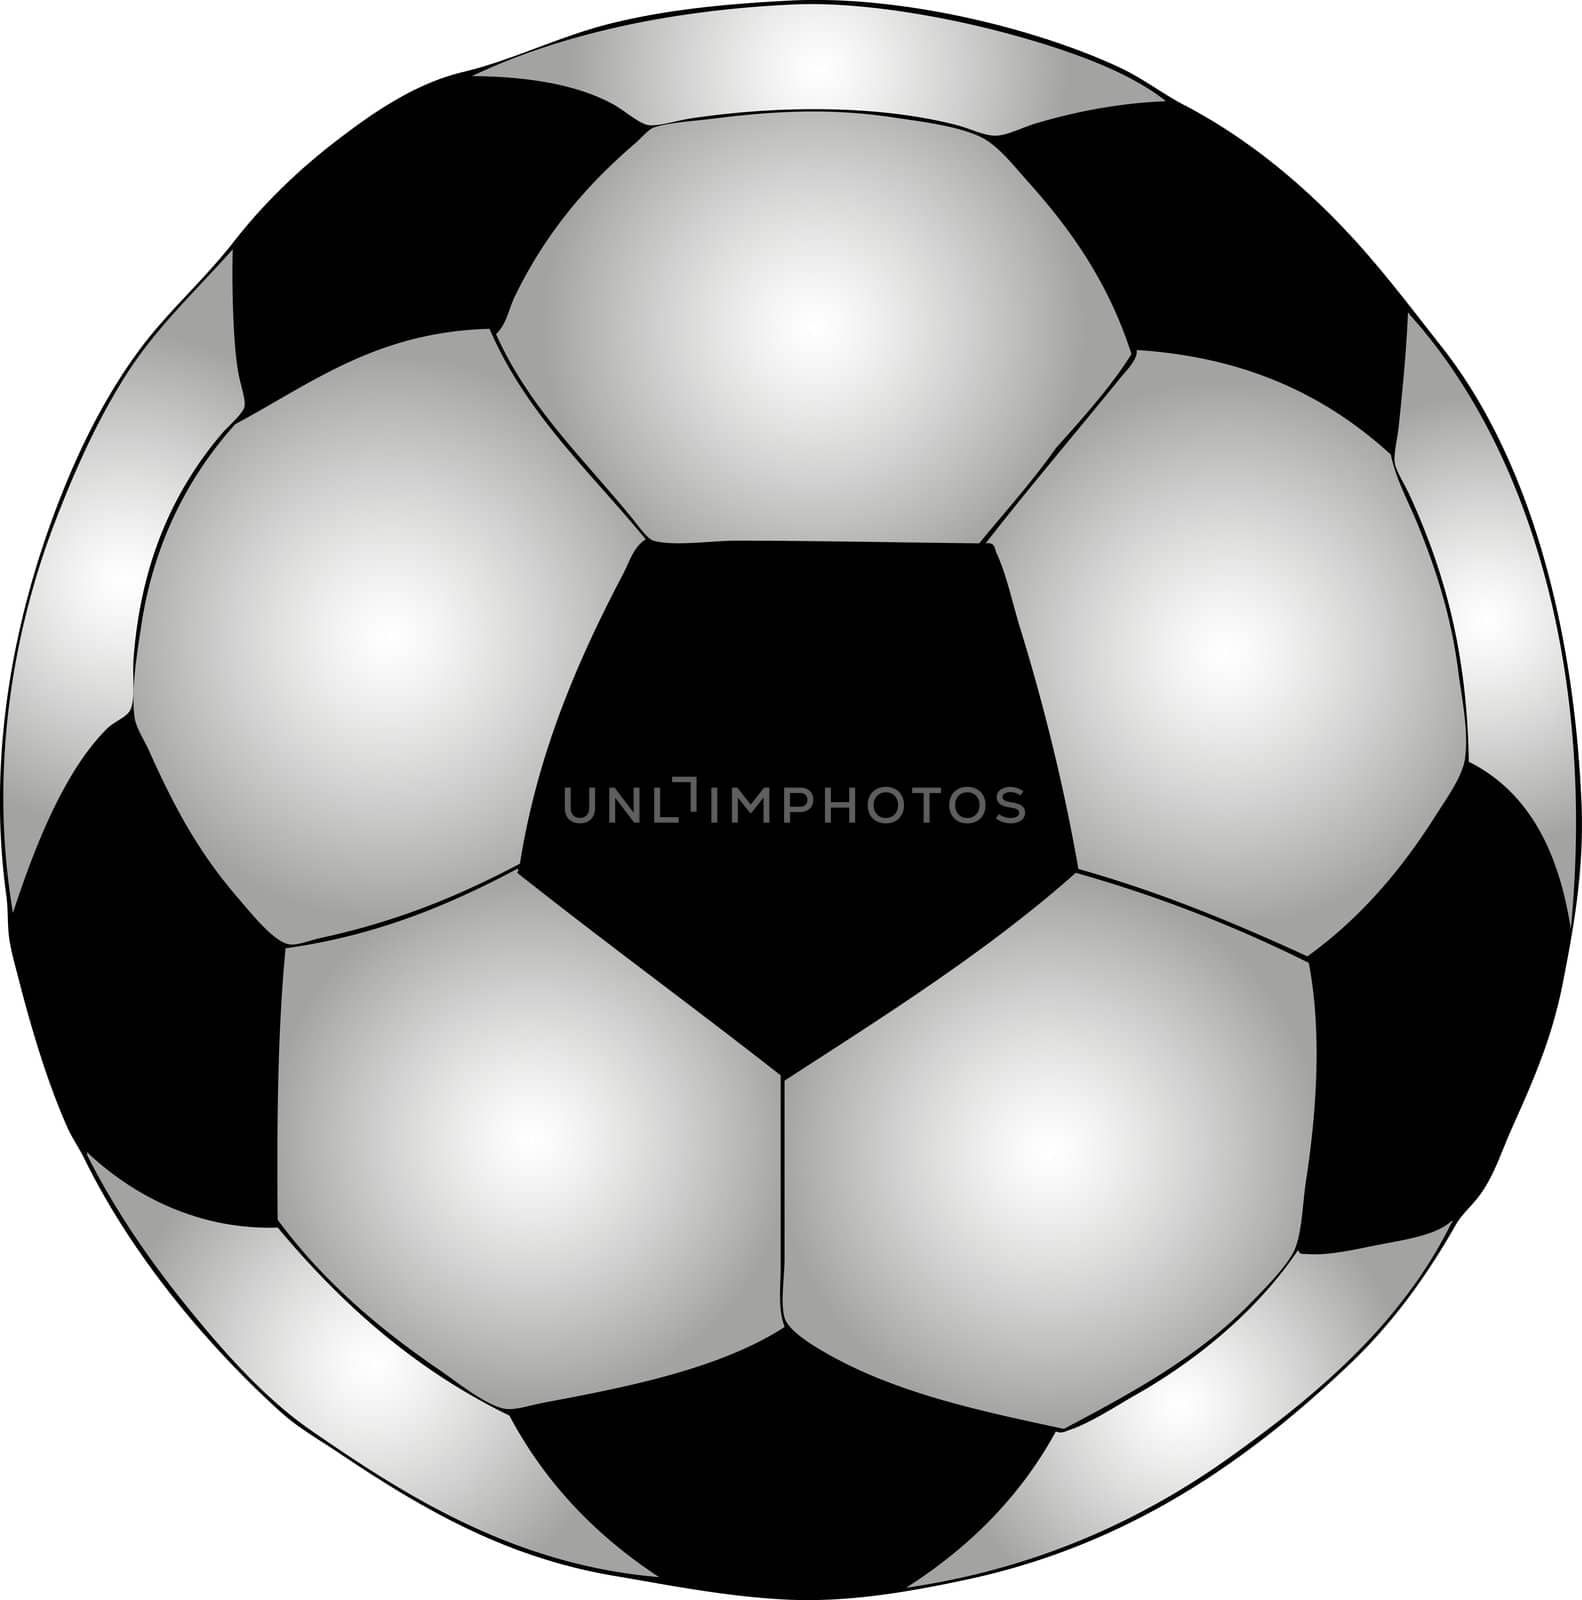 illustration of a soccer ball